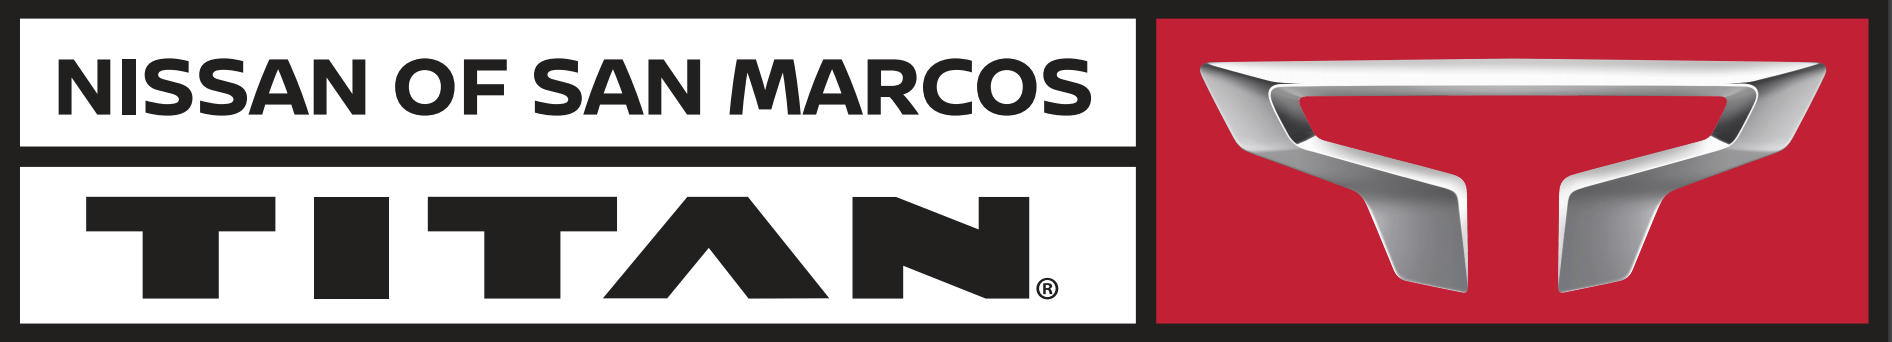 Nissan Titan Logo - Nissan Titan Information | Nissan of San Marcos